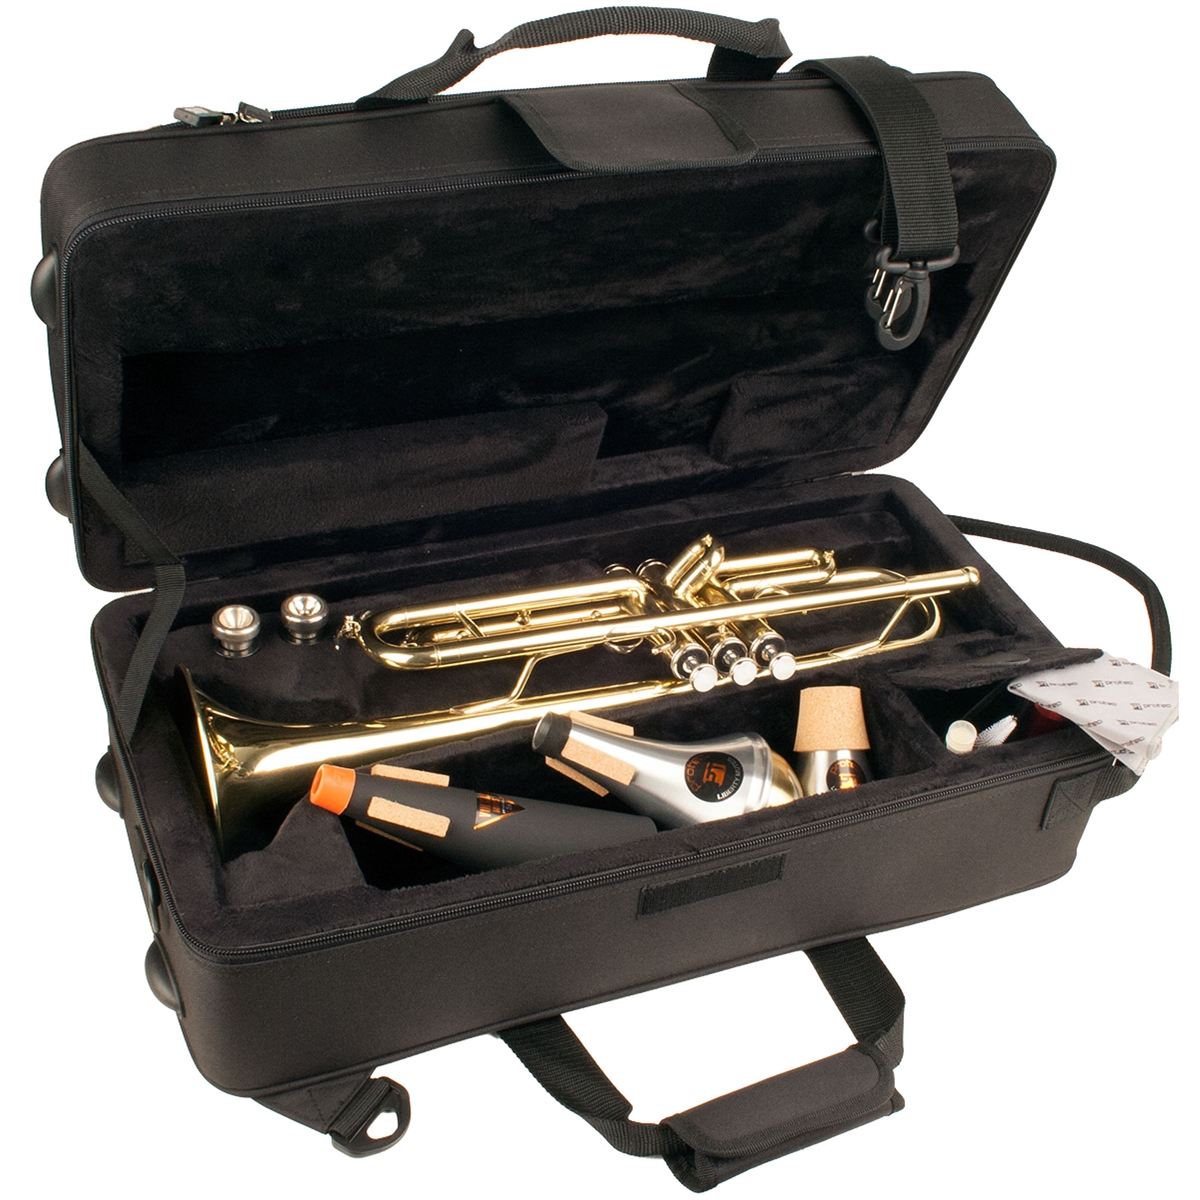 Protec MX301 Case for Trumpet